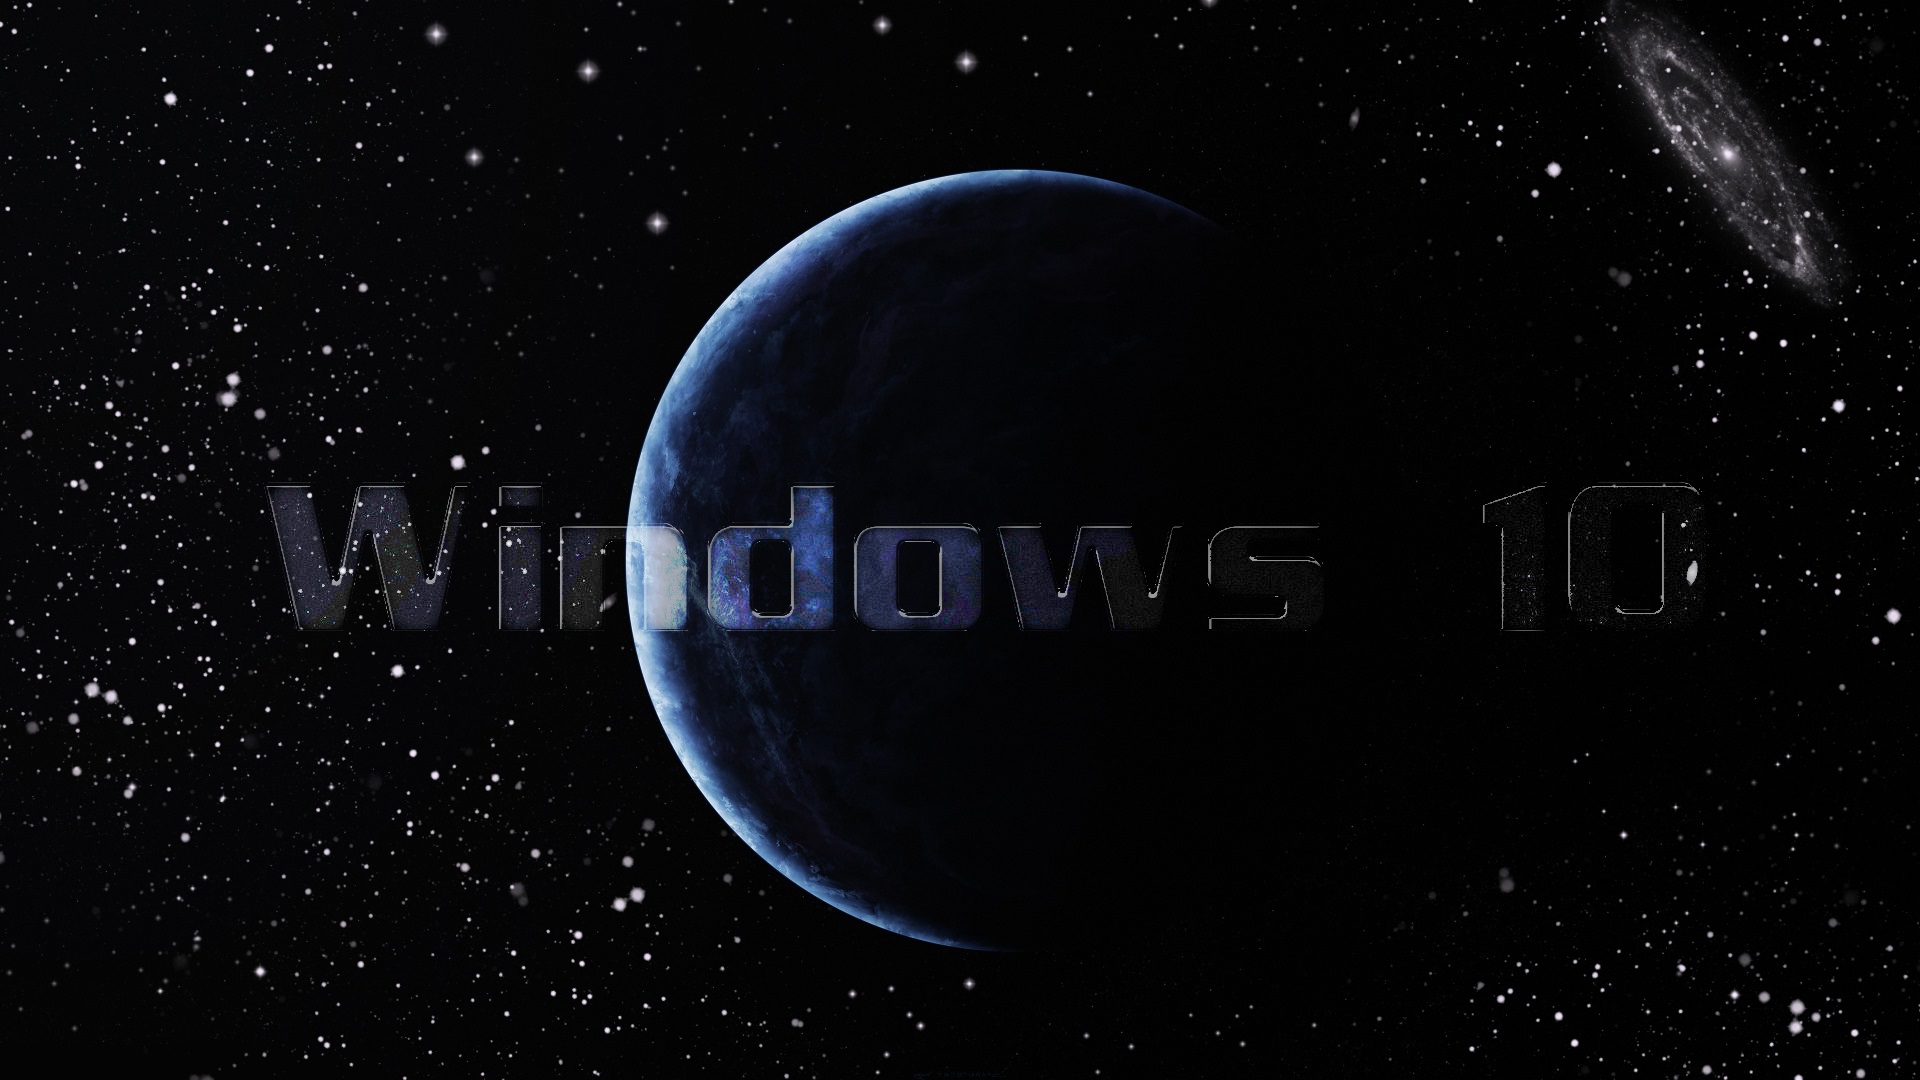 Windows 10 On Galaxy Wallpaper HD 9511 Wallpaper High Resolution 1920x1080